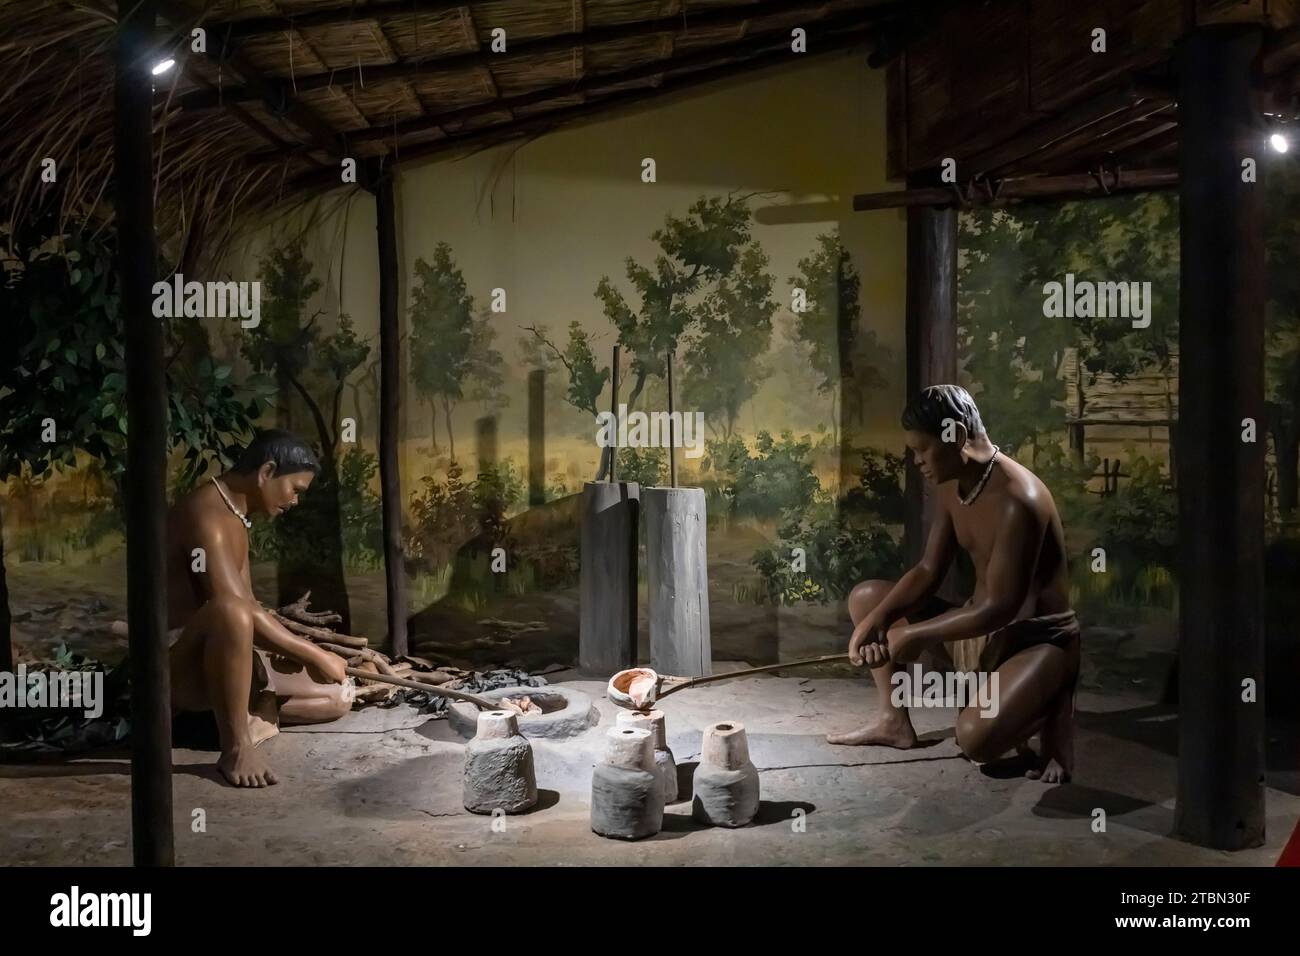 Ban Chiang national museum, diorama of ancient human life, metallurgy, Ban Chiang, Udon Thani, Thailand, Southeast Asia, Asia Stock Photo